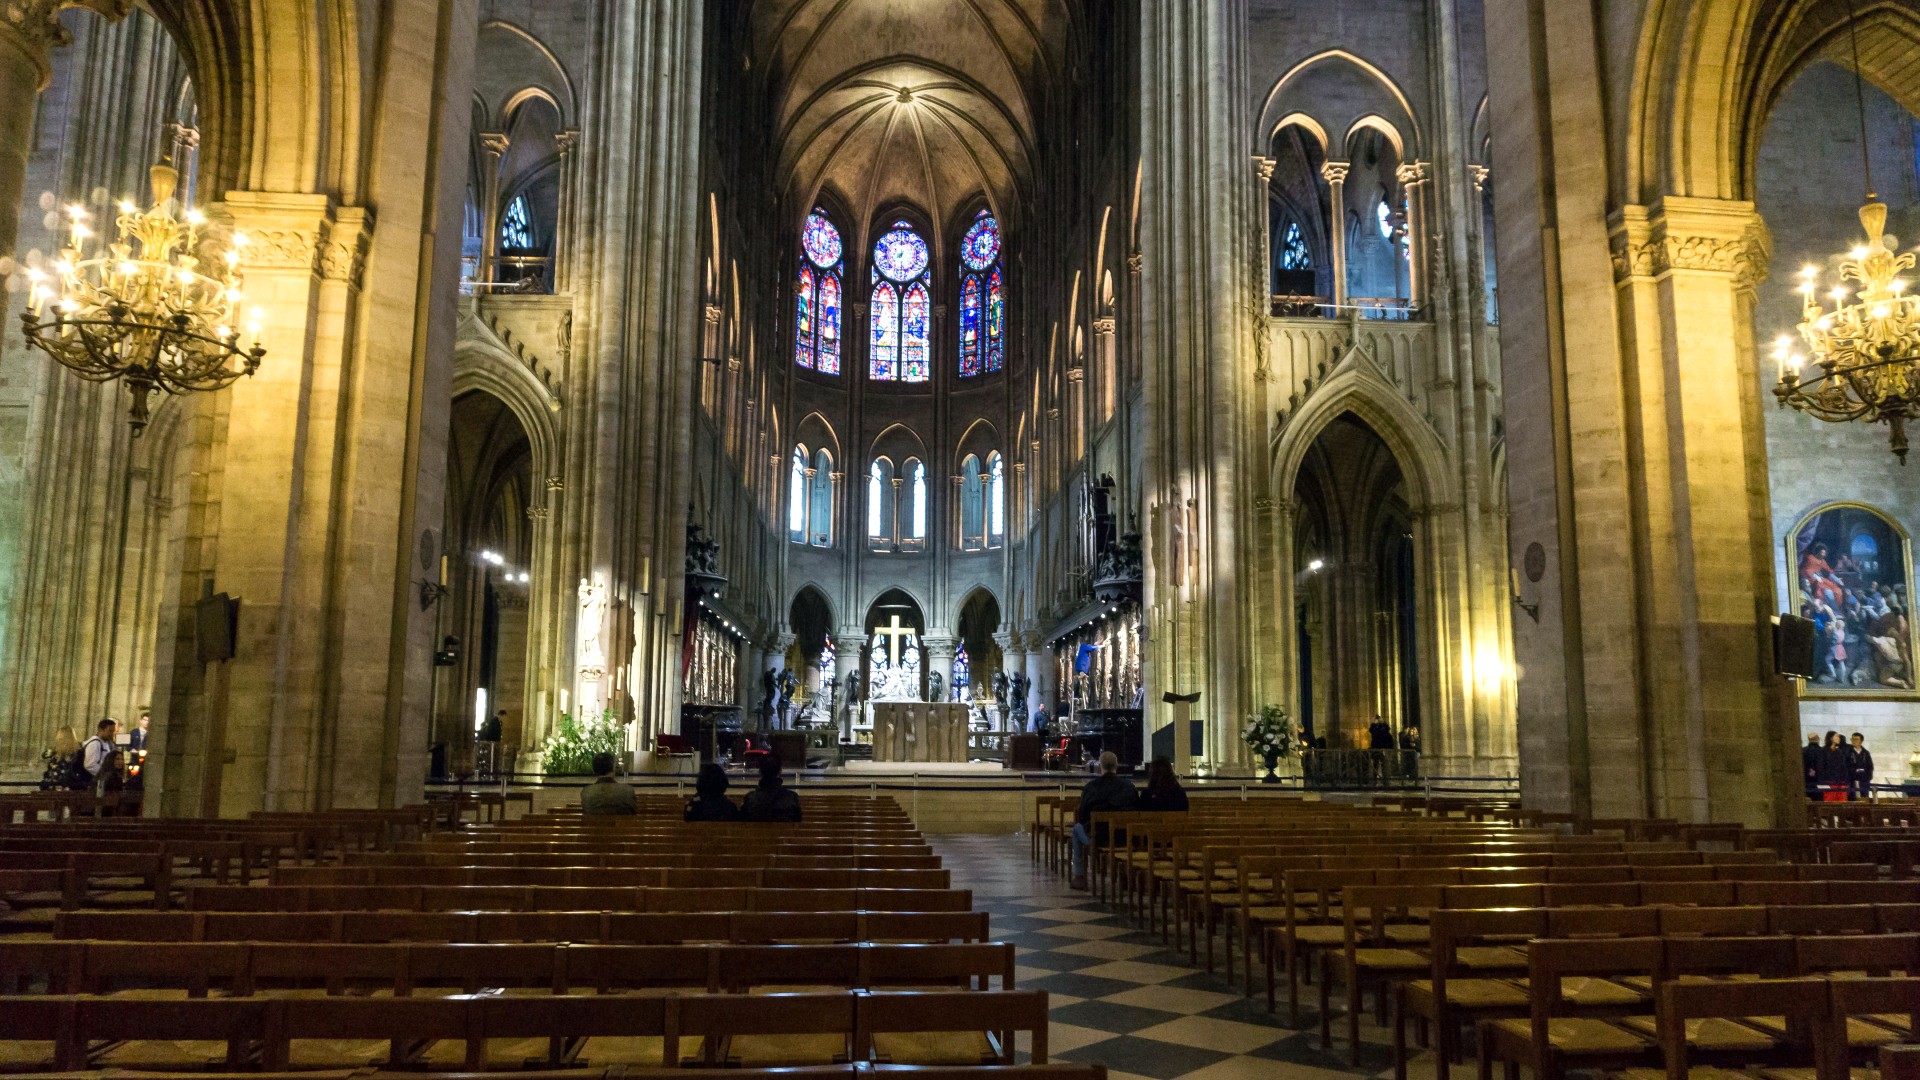 picture: Catedral parisiense dos ricos, banco, nave, França (image)